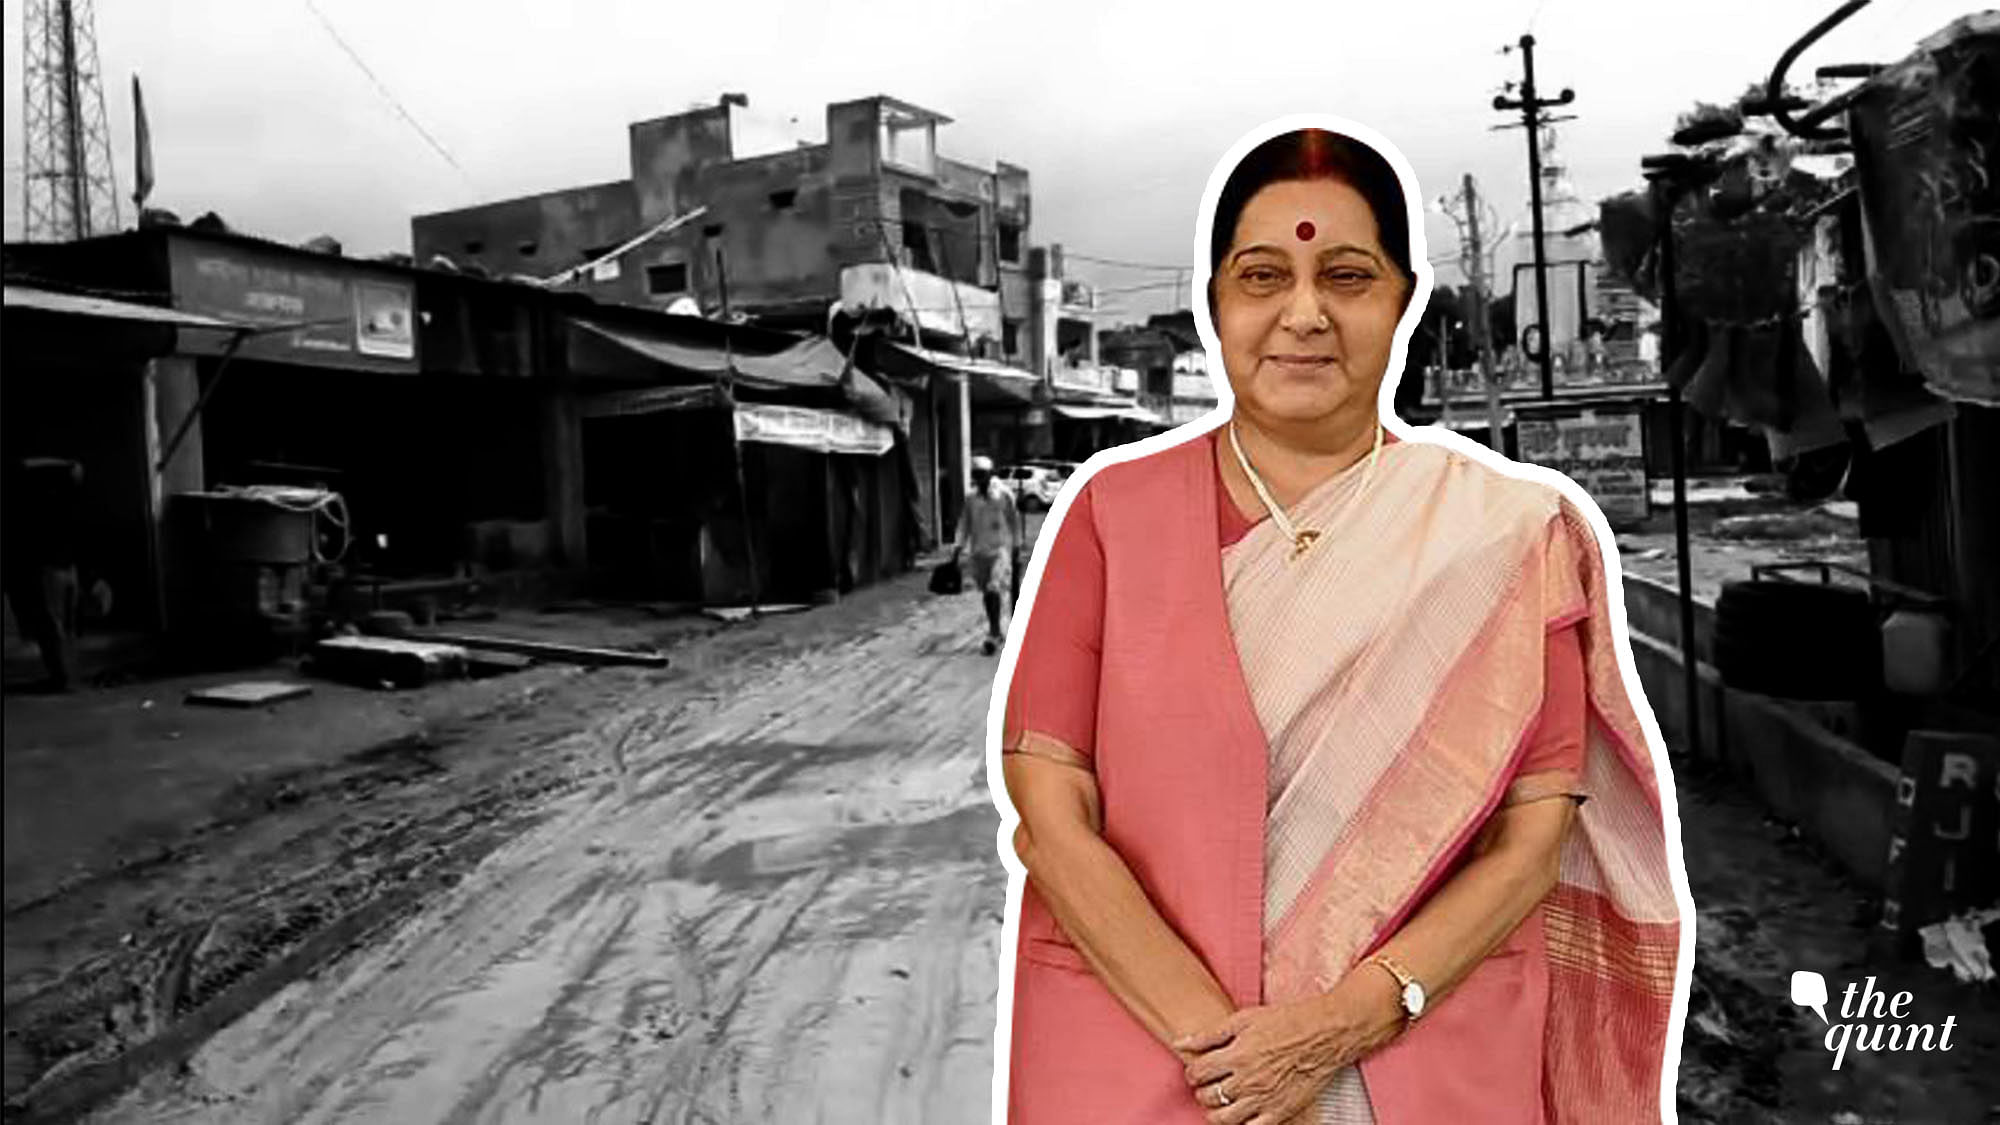 Foreign Minister Sushma Swaraj adopted Ajnas village under the Sansad Adarsh Gram Yojna,